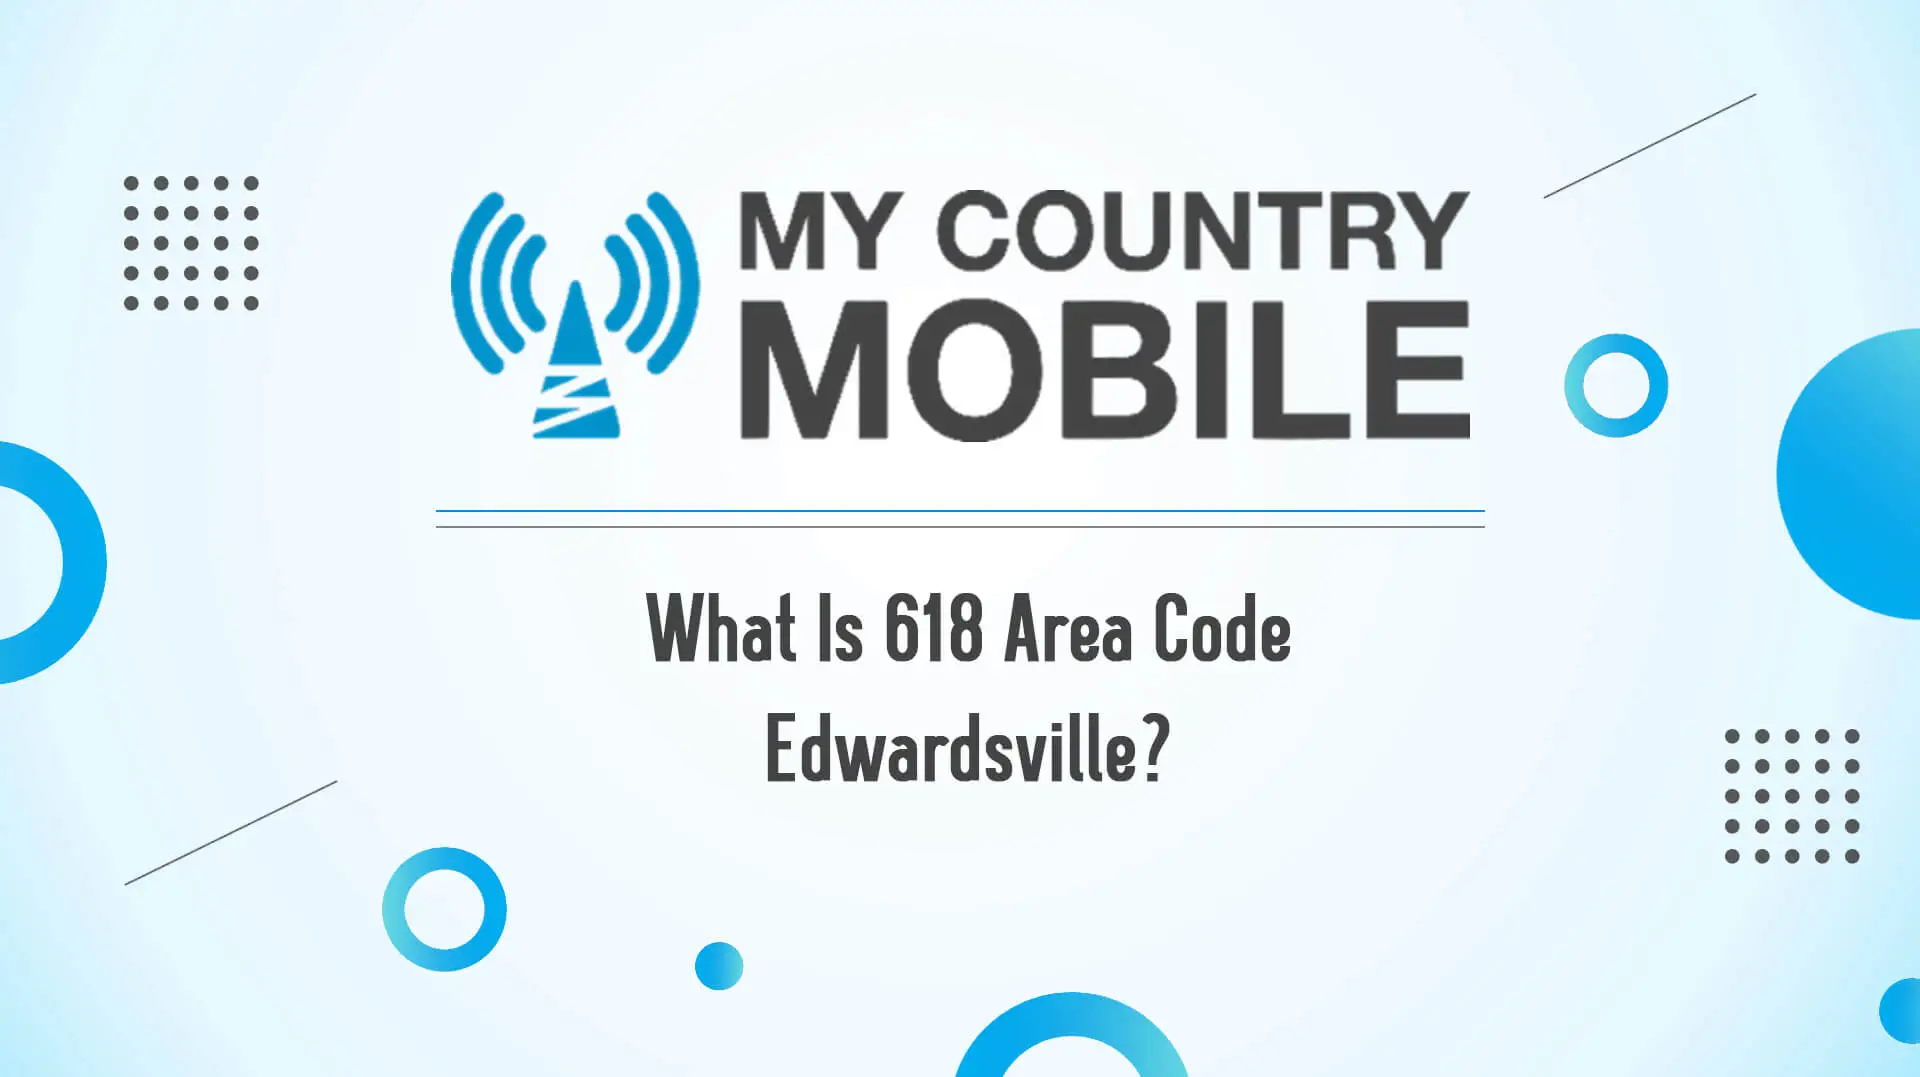 618 area code Edwardsville